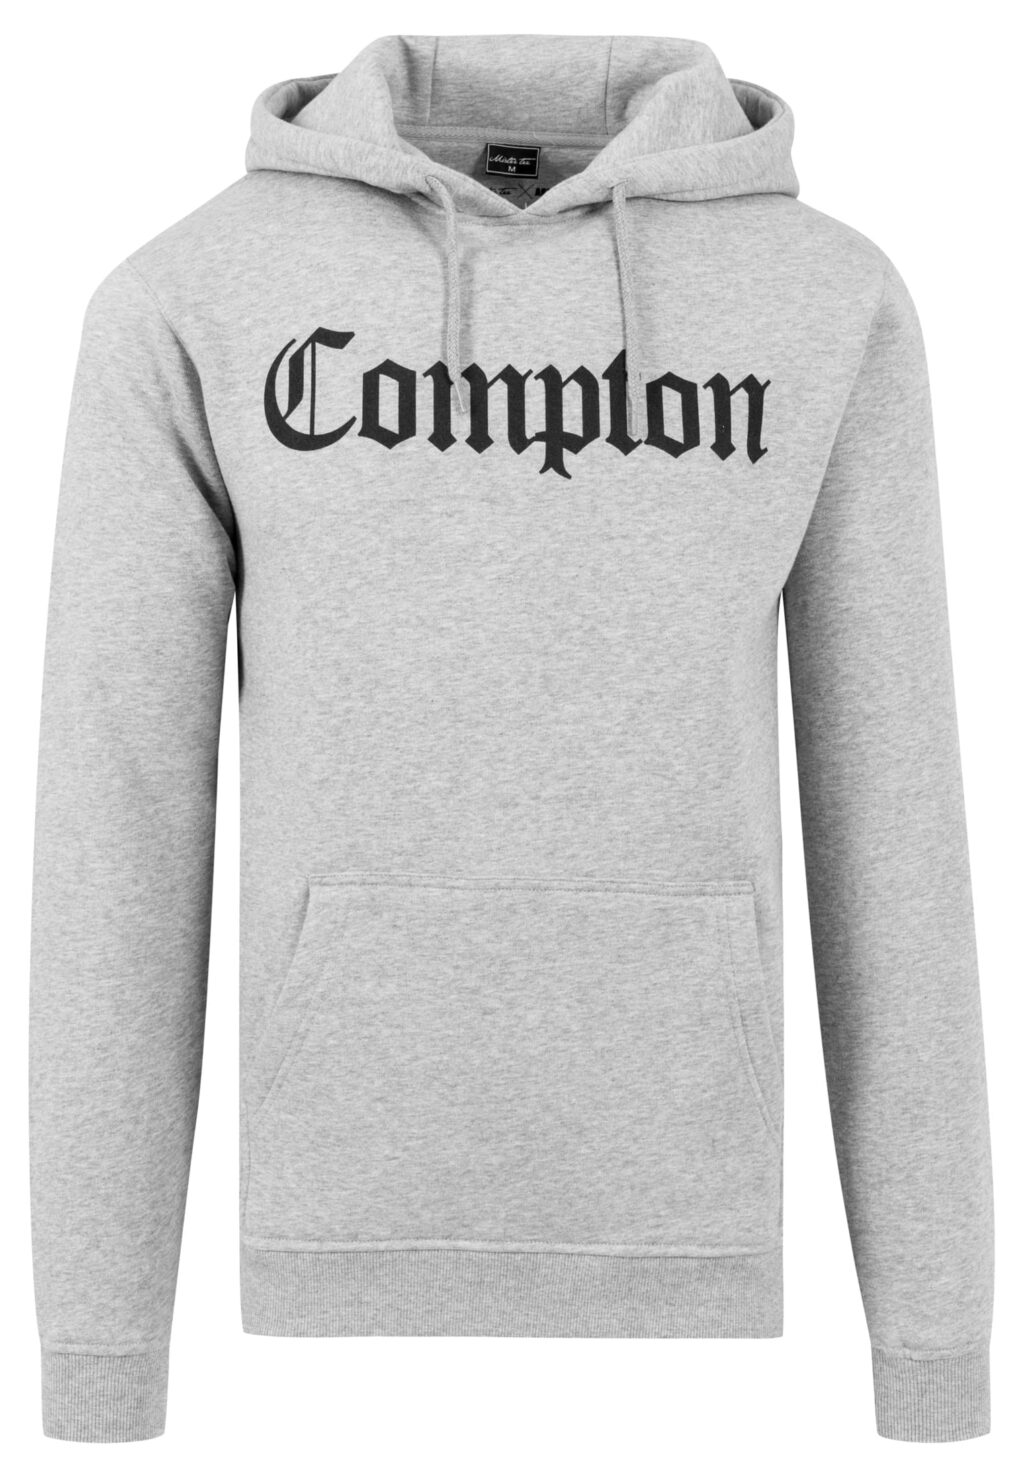 Compton Hoody h.grey/blk MT269